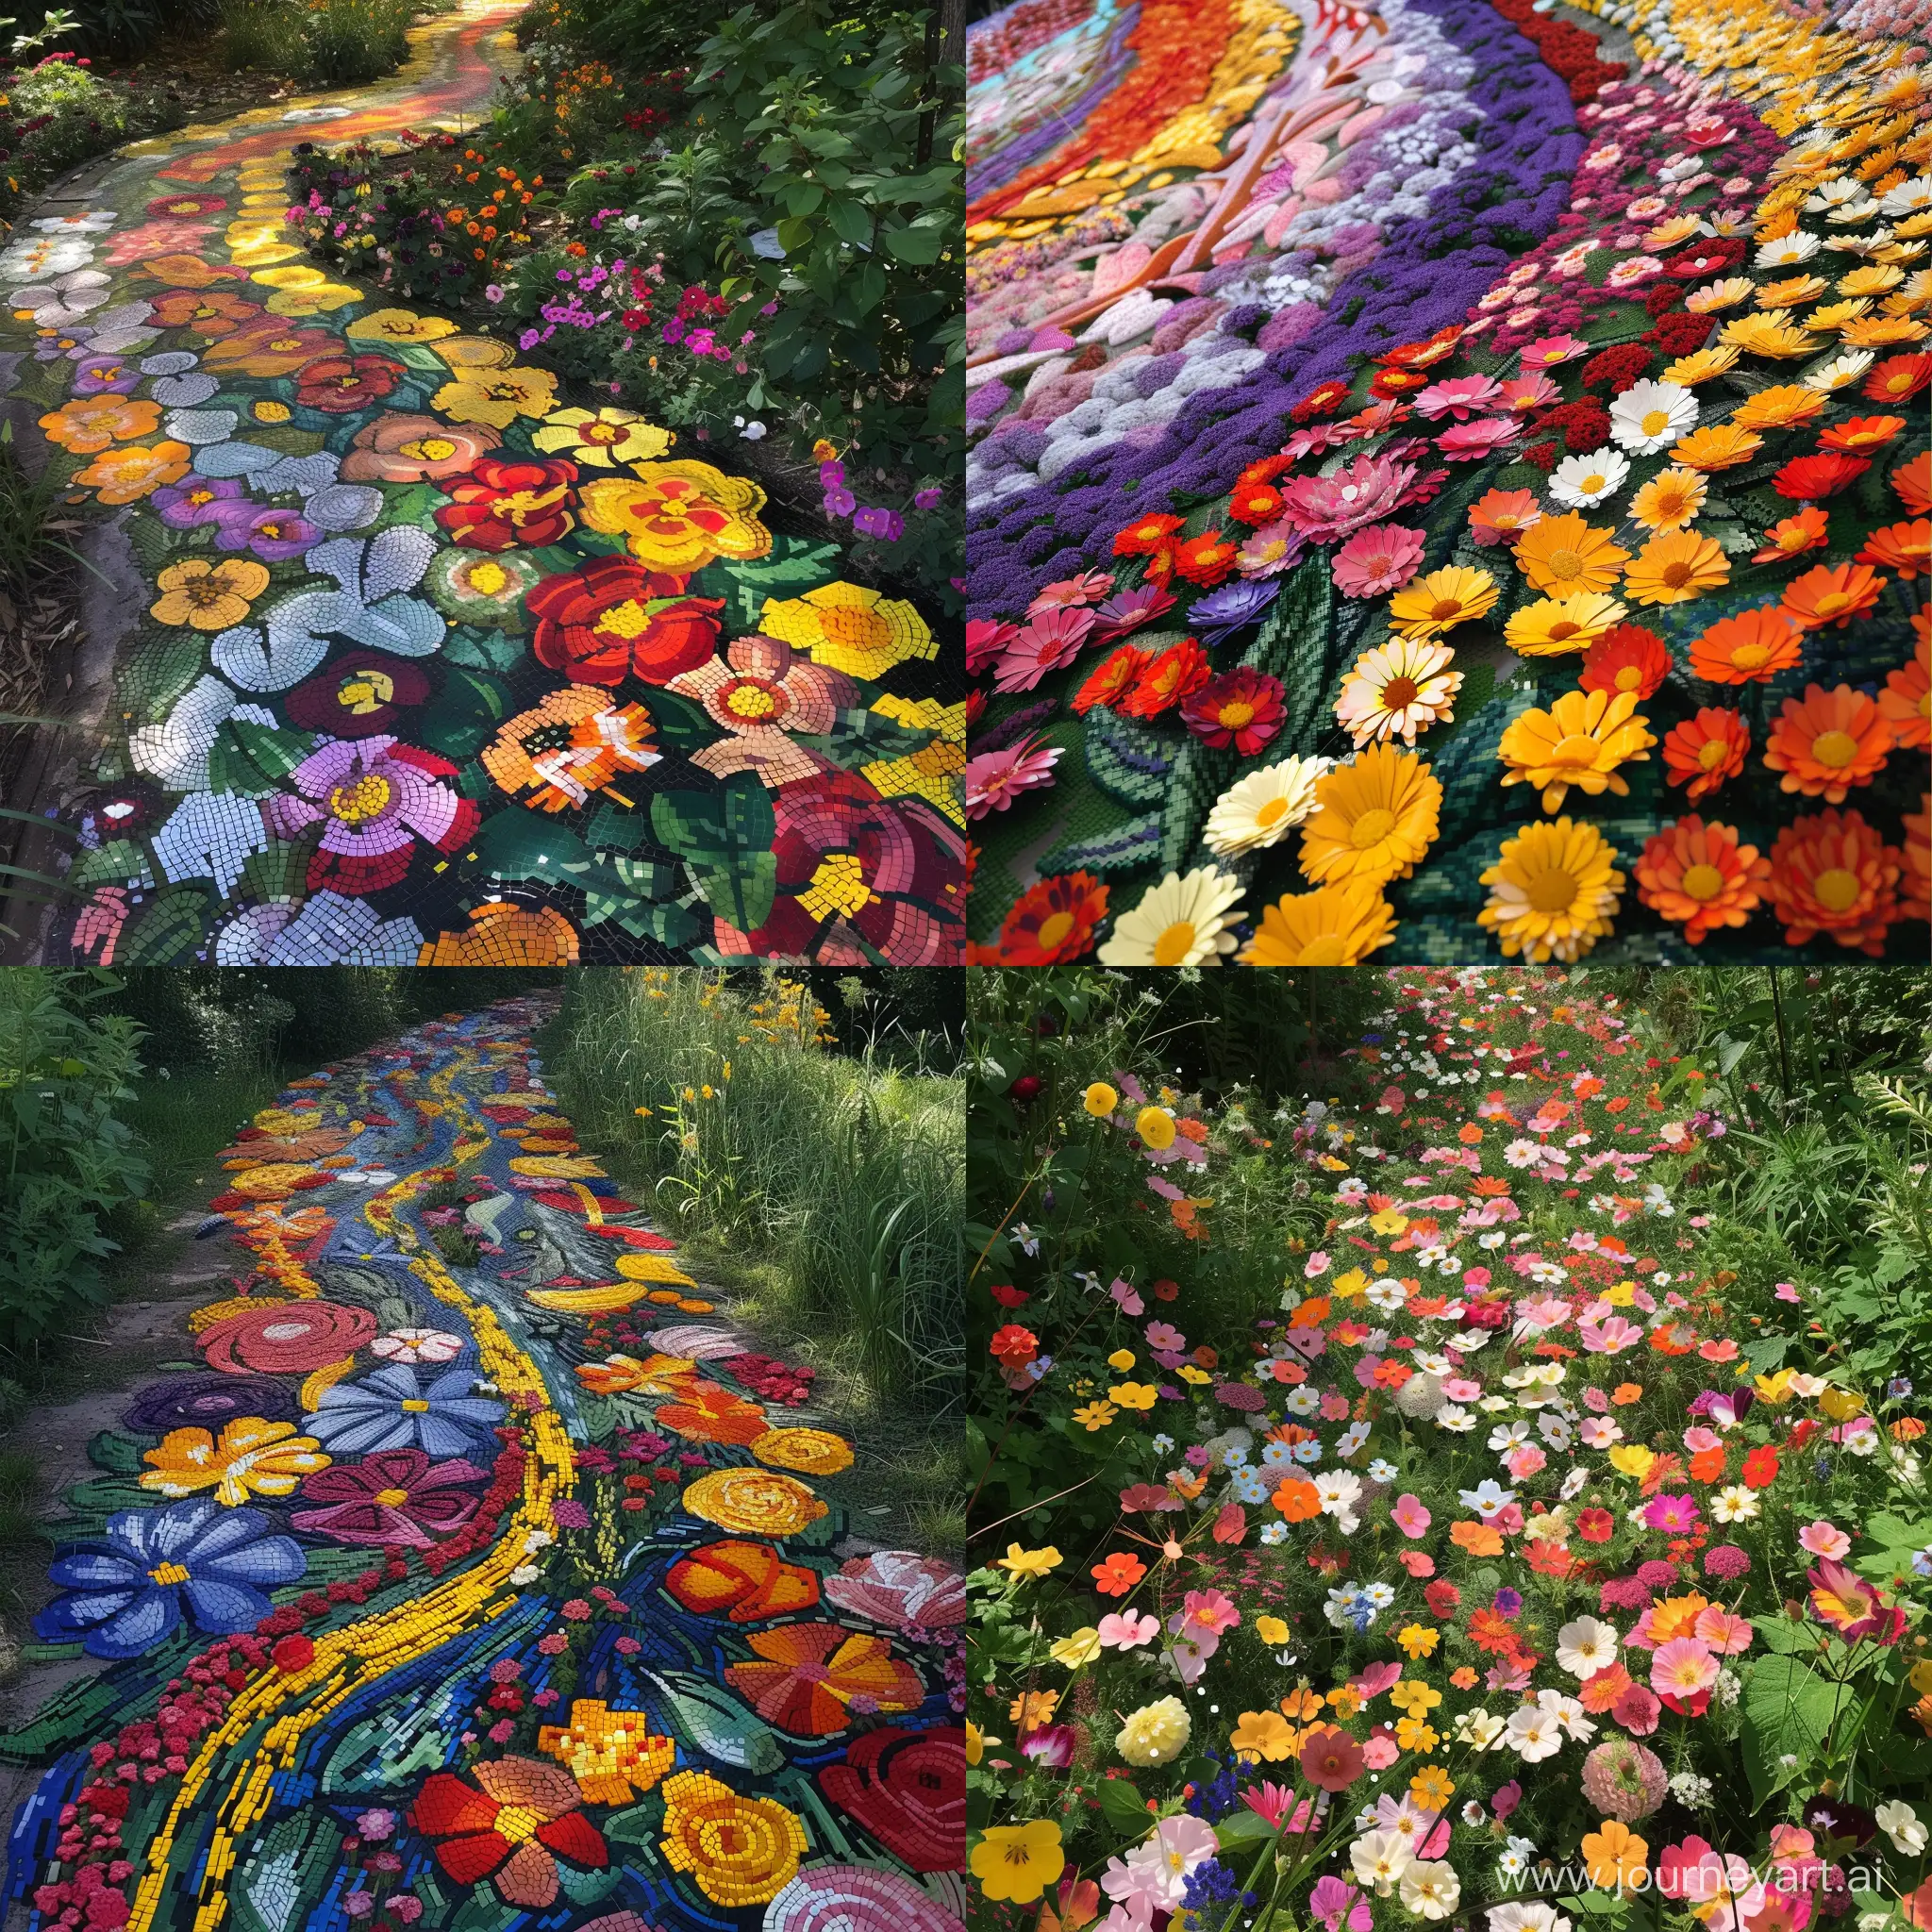 Pixelated-Floral-Splendor-Vibrant-Flower-Carpet-Design-v6-11-Aspect-Ratio-70764-Pixels